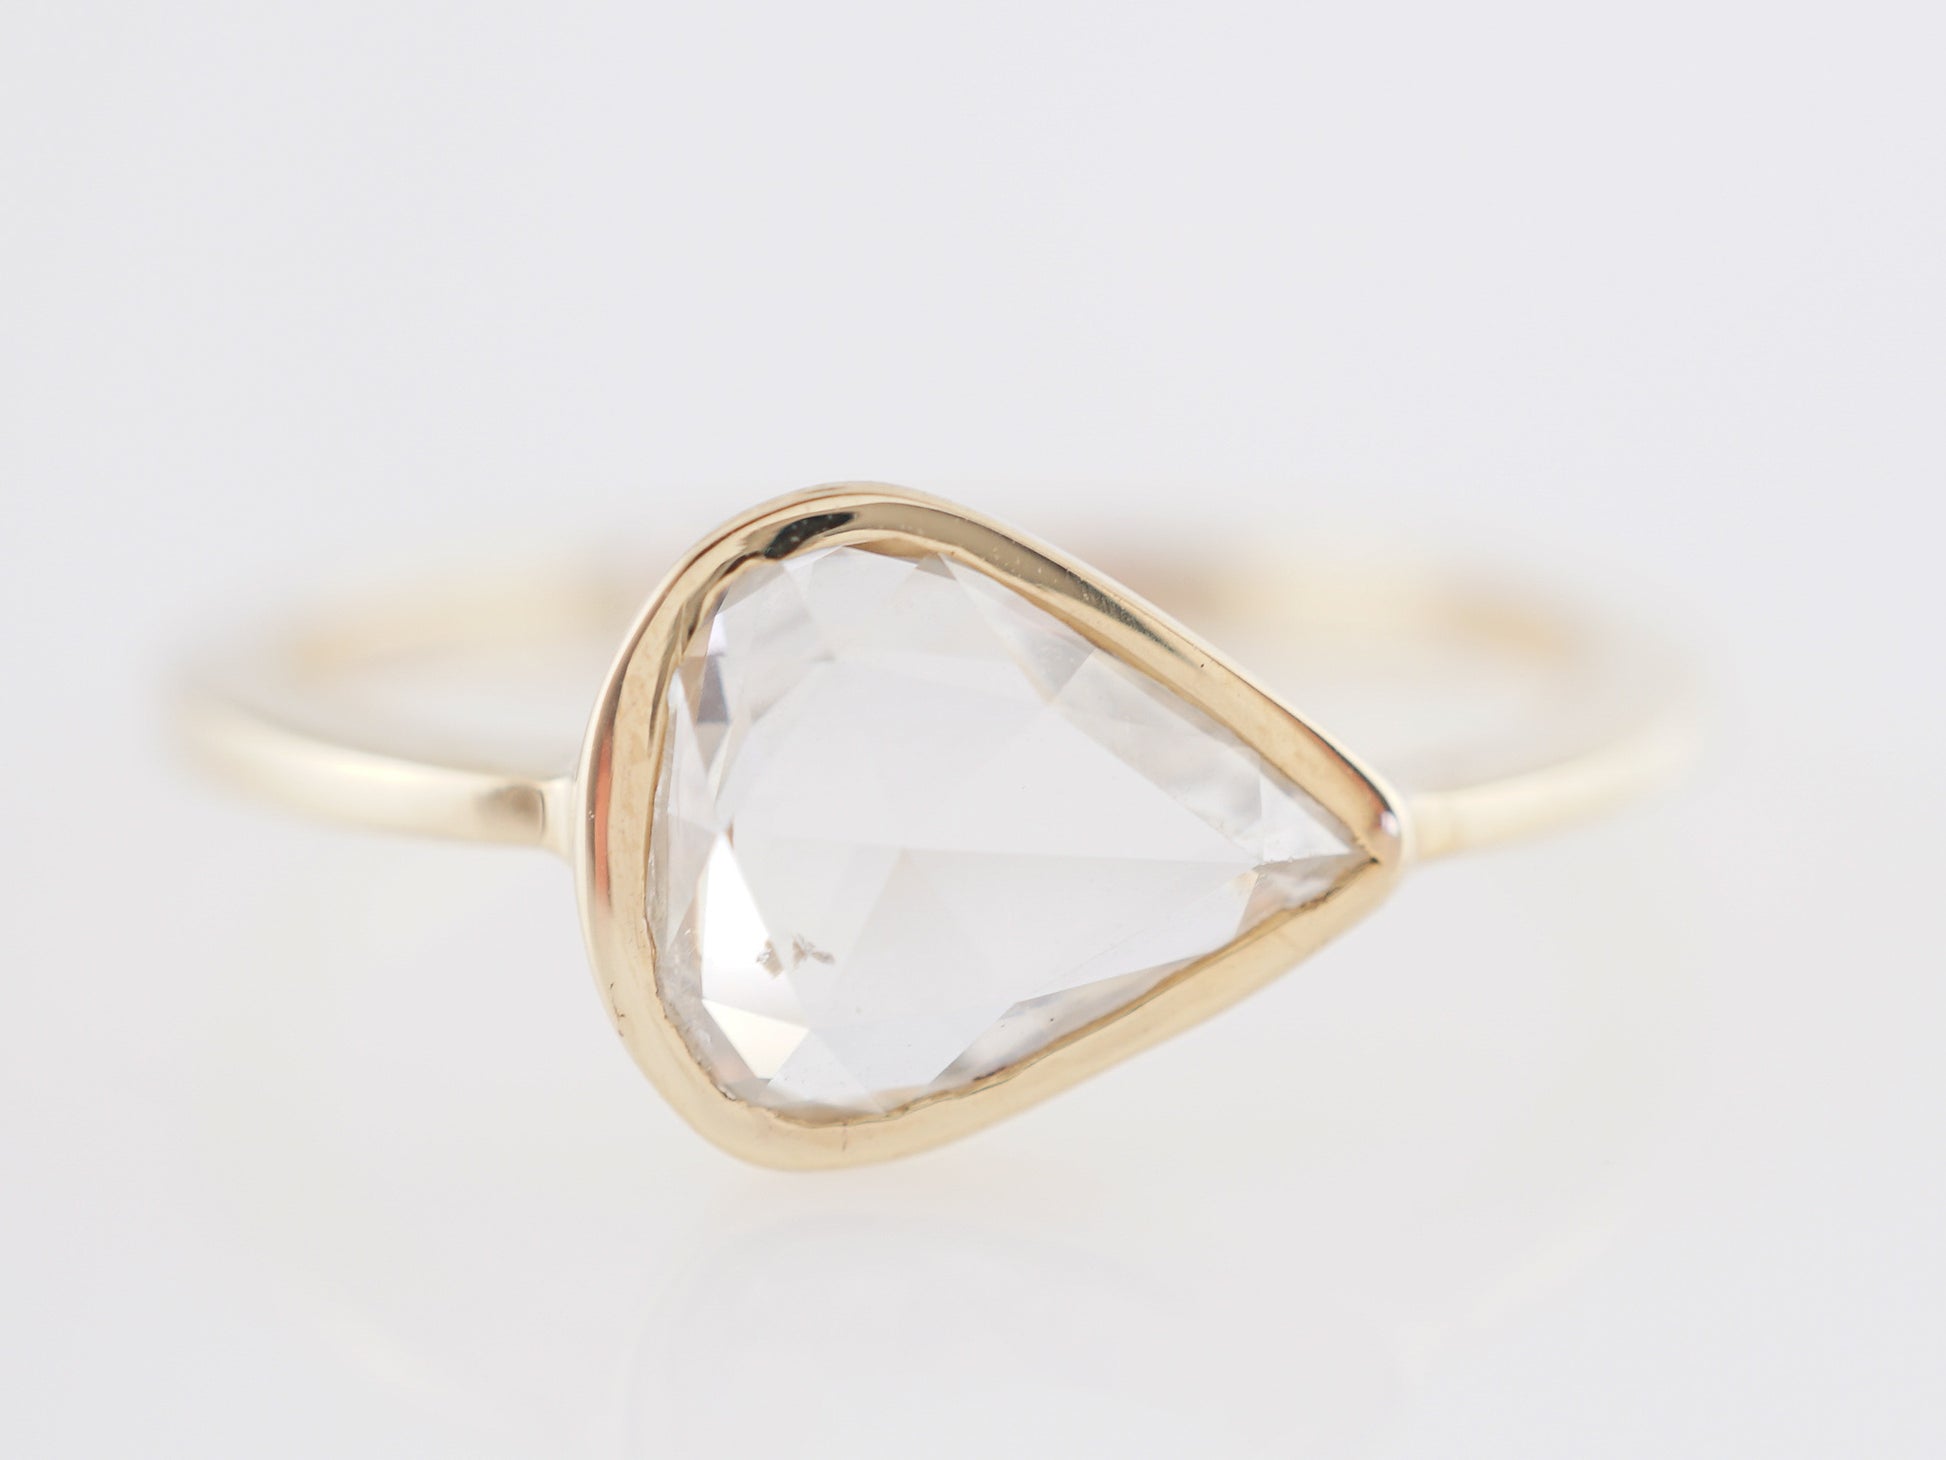 1.14 Pear Shaped Rose Cut Diamond Engagement Ring 14k GoldComposition: 14 Karat Yellow GoldRing Size: 6.5Total Diamond Weight: 1.14 ctTotal Gram Weight: 1.8 gInscription: 14k